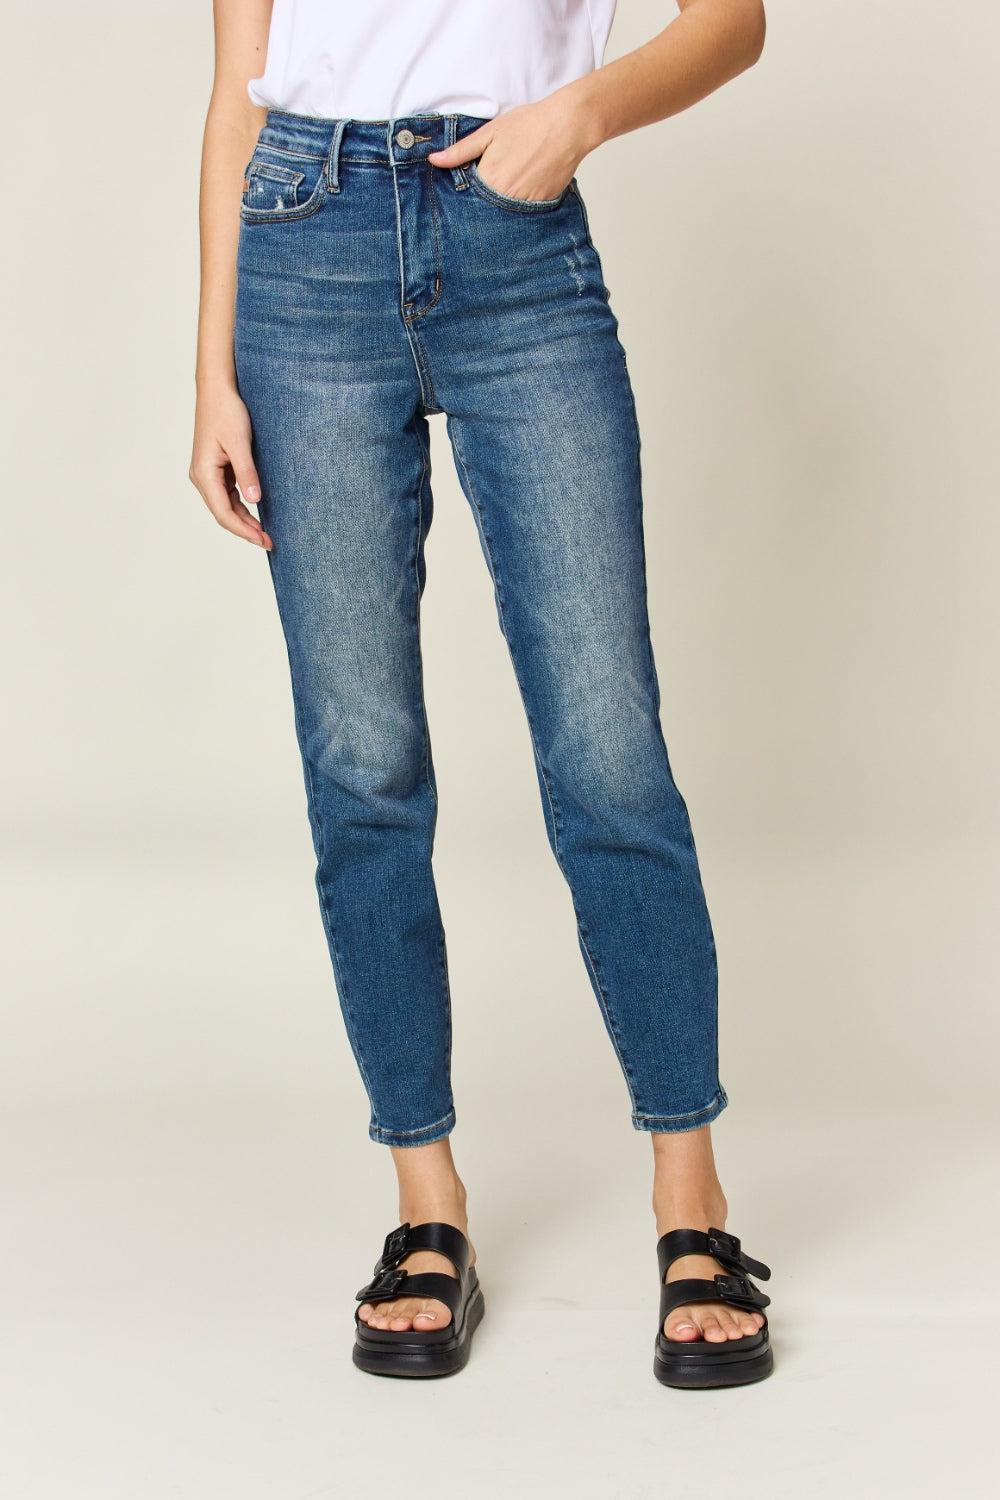 Judy Blue Full Size Tummy Control High Waist Slim Jeans - Confidence Boosting & Trendy Denim